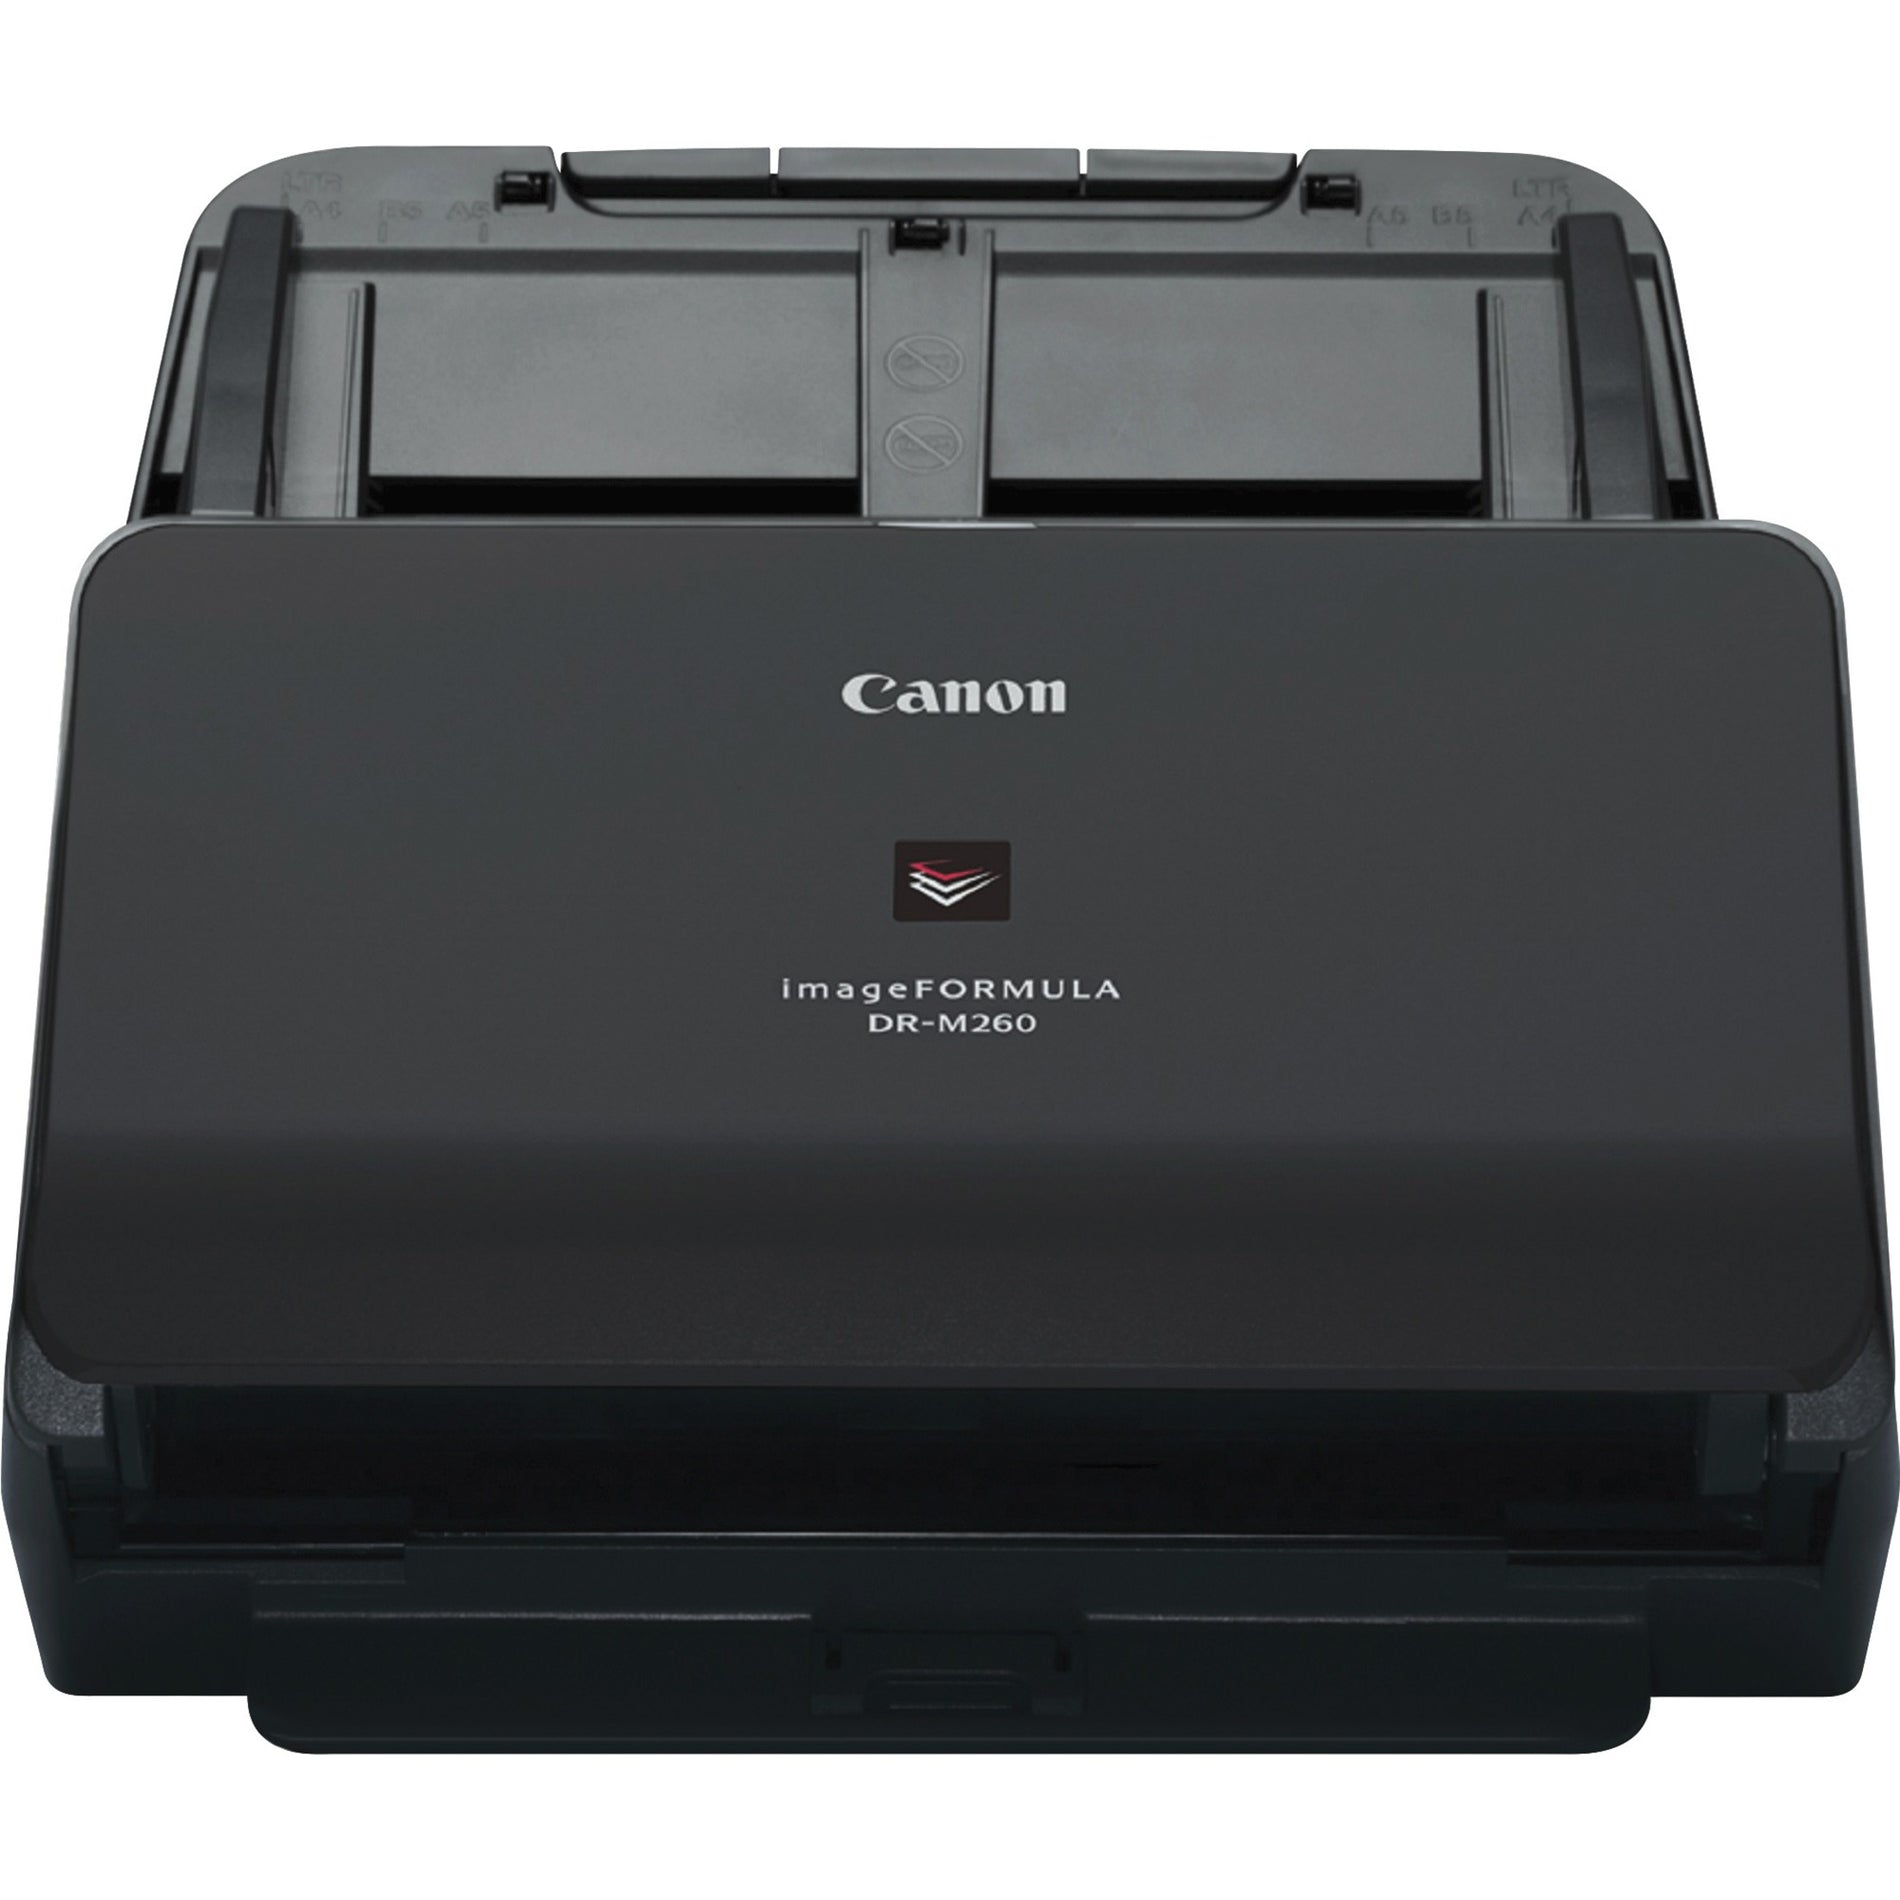 Canon 2405C002 imageFORMULA DR-M260 Office Document Scanner, 600 dpi, 80-Sheet Capacity, Black